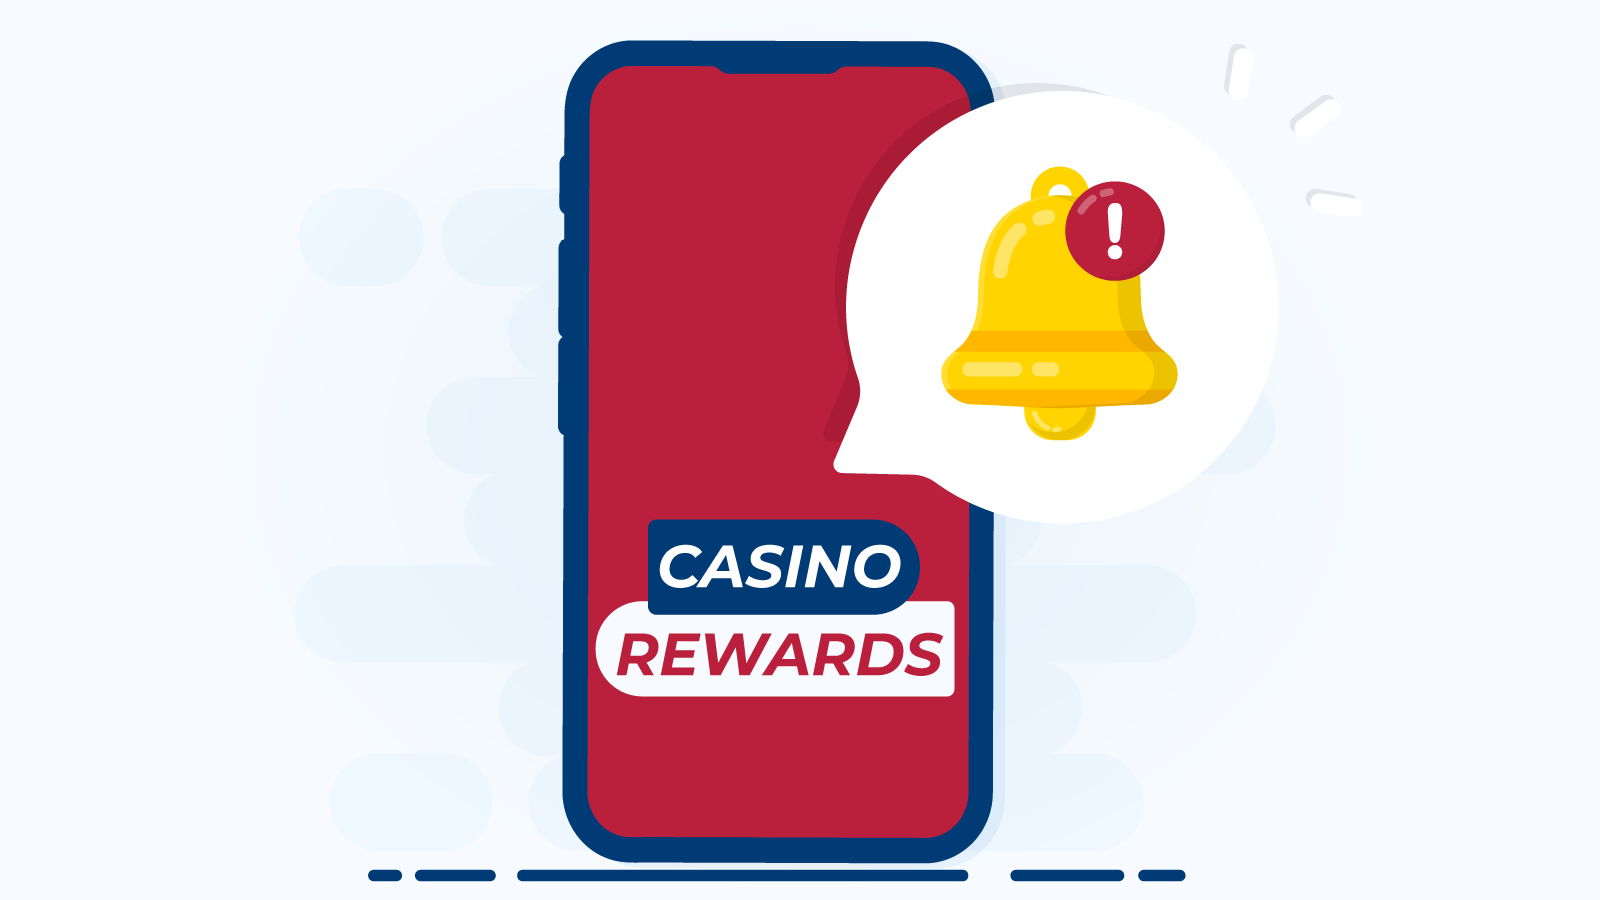 Rewards Casinos flaws but not dealbreakers